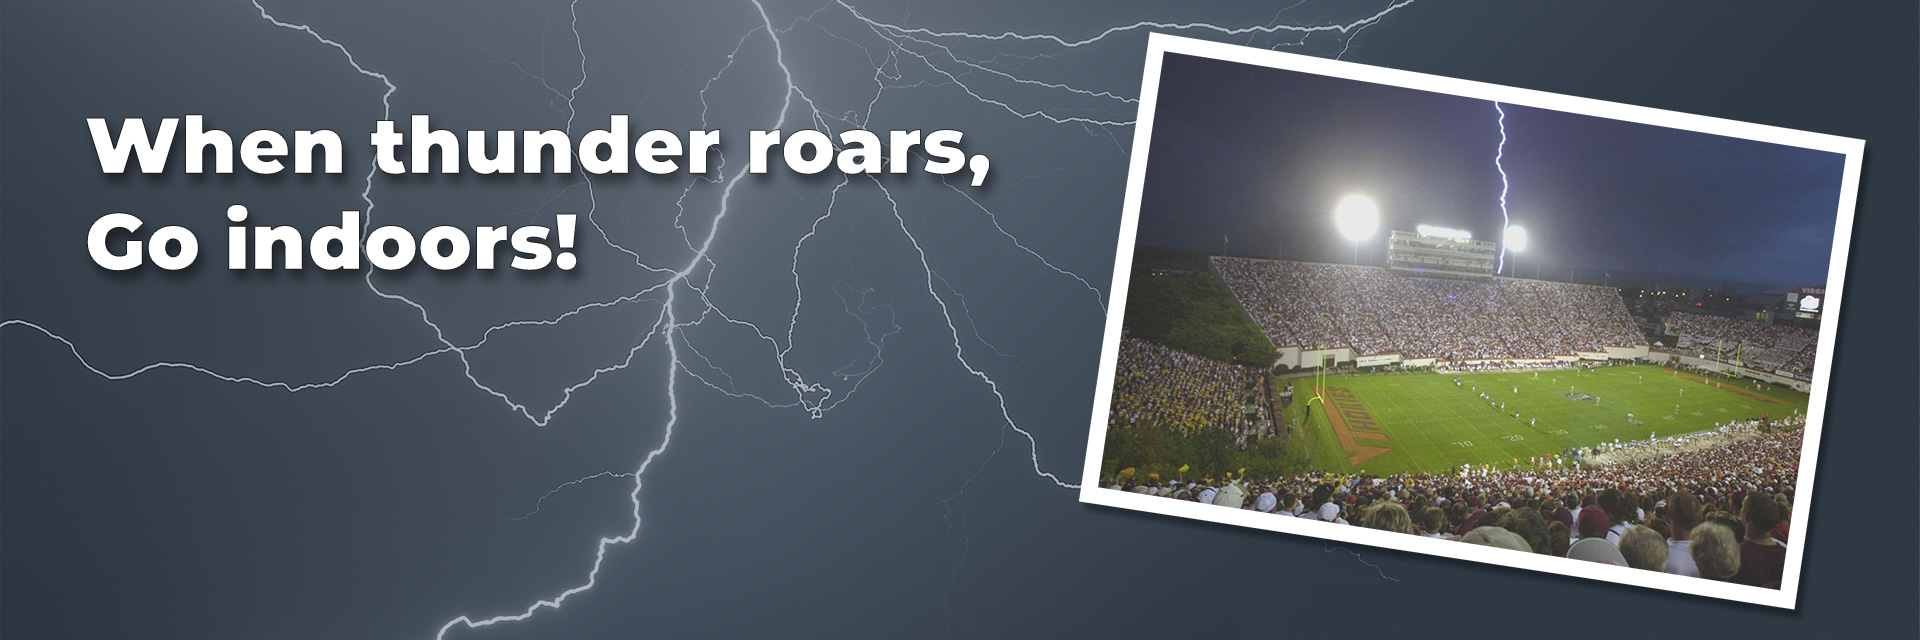 Lightning over baseball field. Text: 